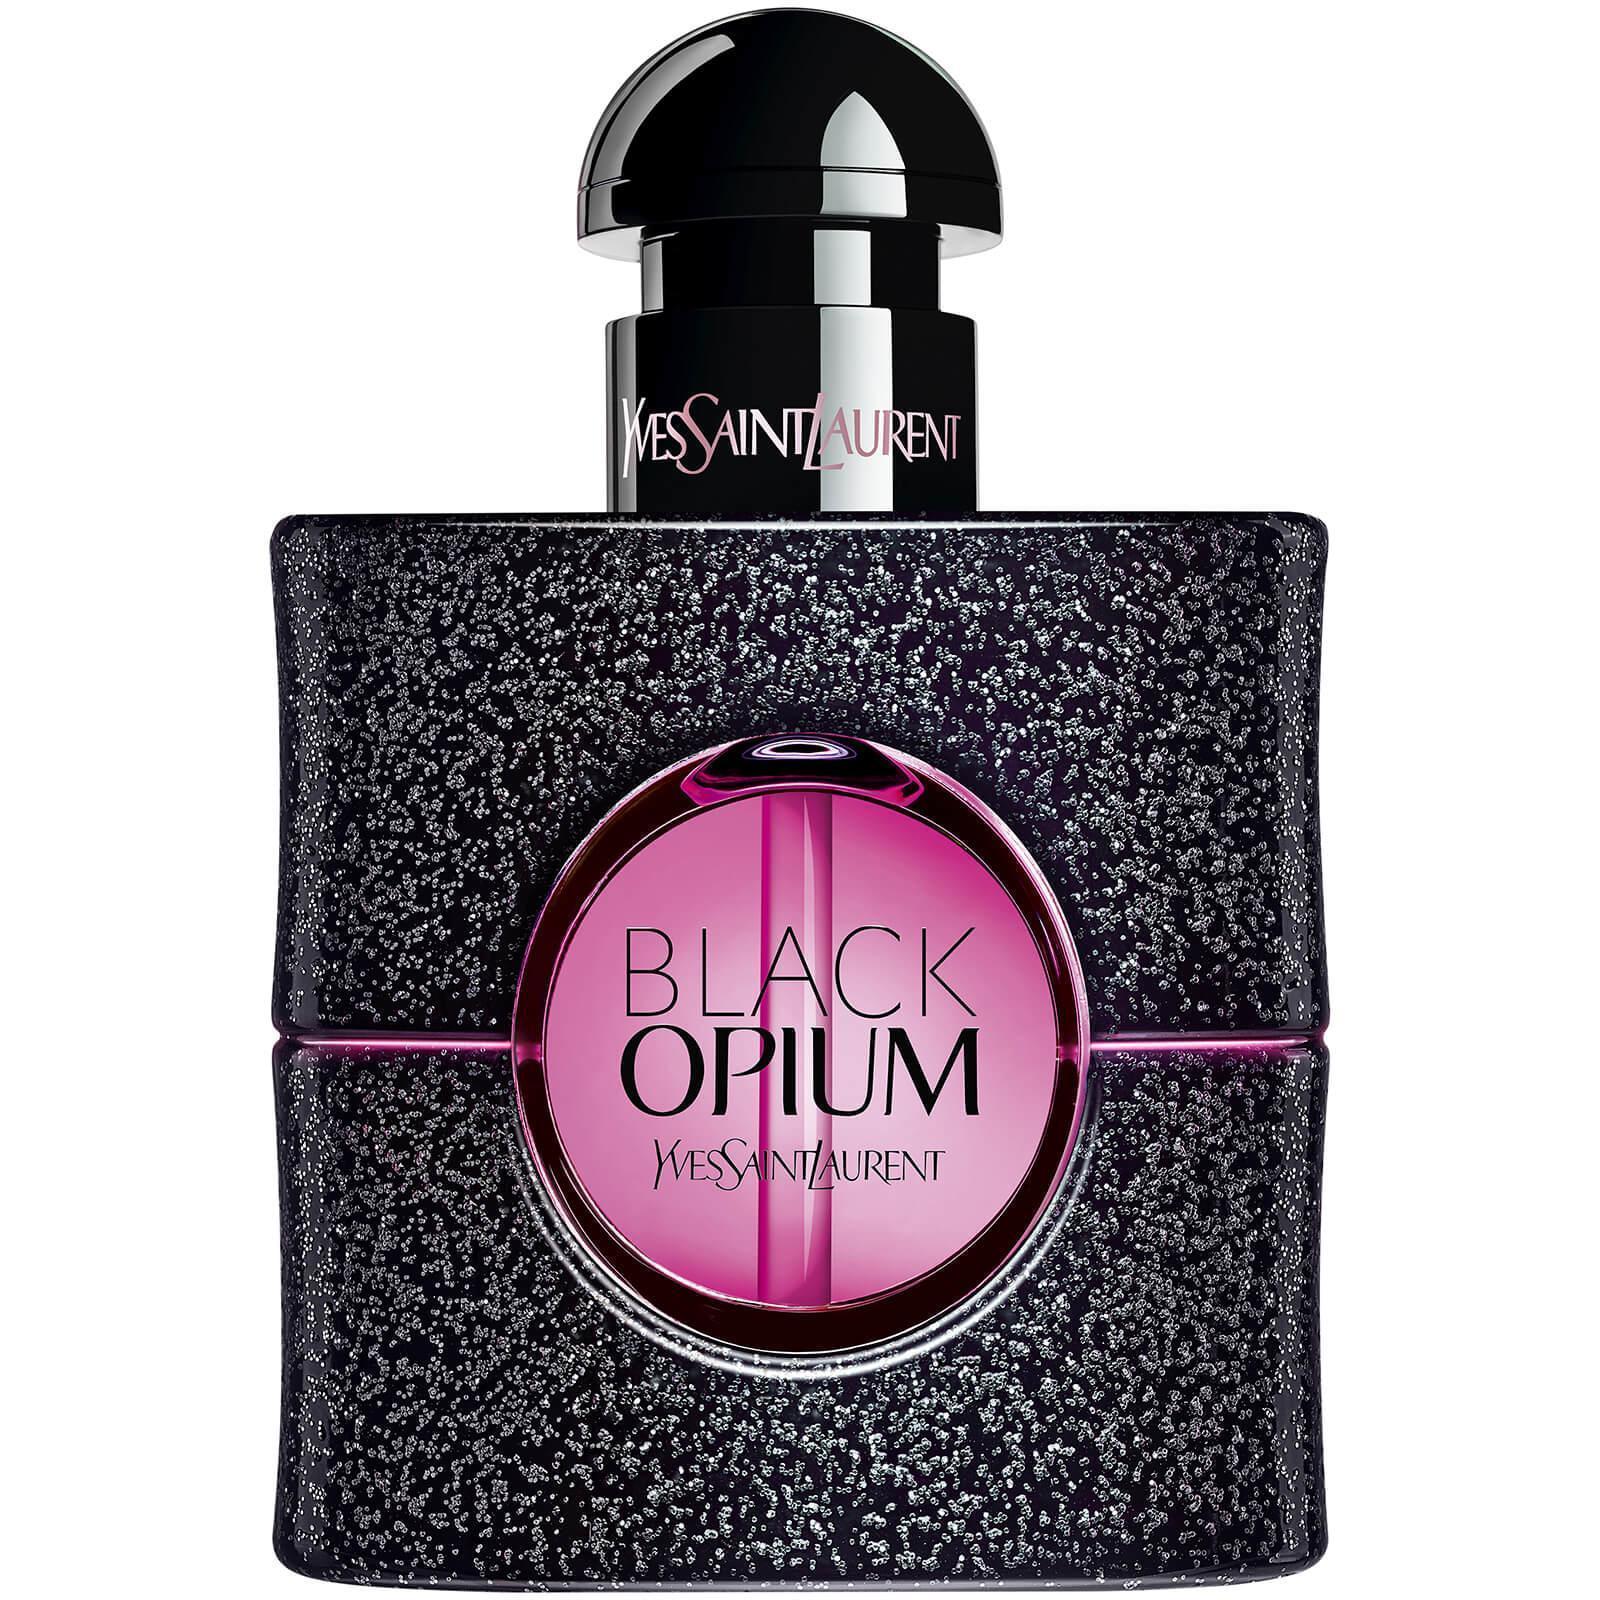 perfume, indybest, fragrance, amazon, black friday, best perfume deals in the black friday sales, from lancôme to ysl